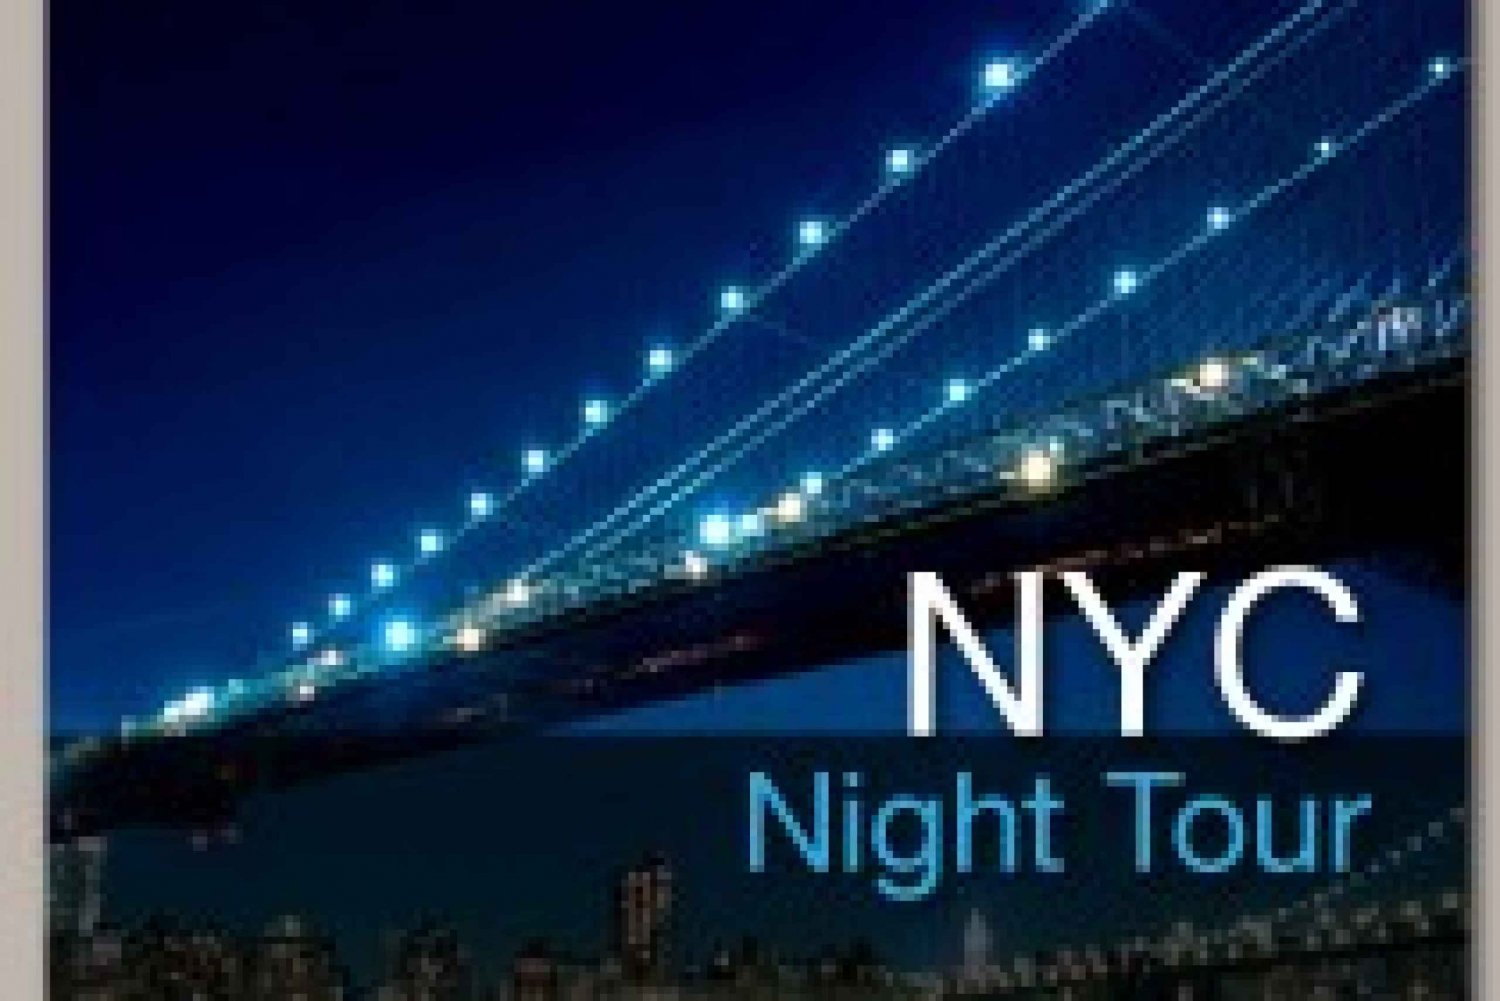 New Yorkin kierros yöllä